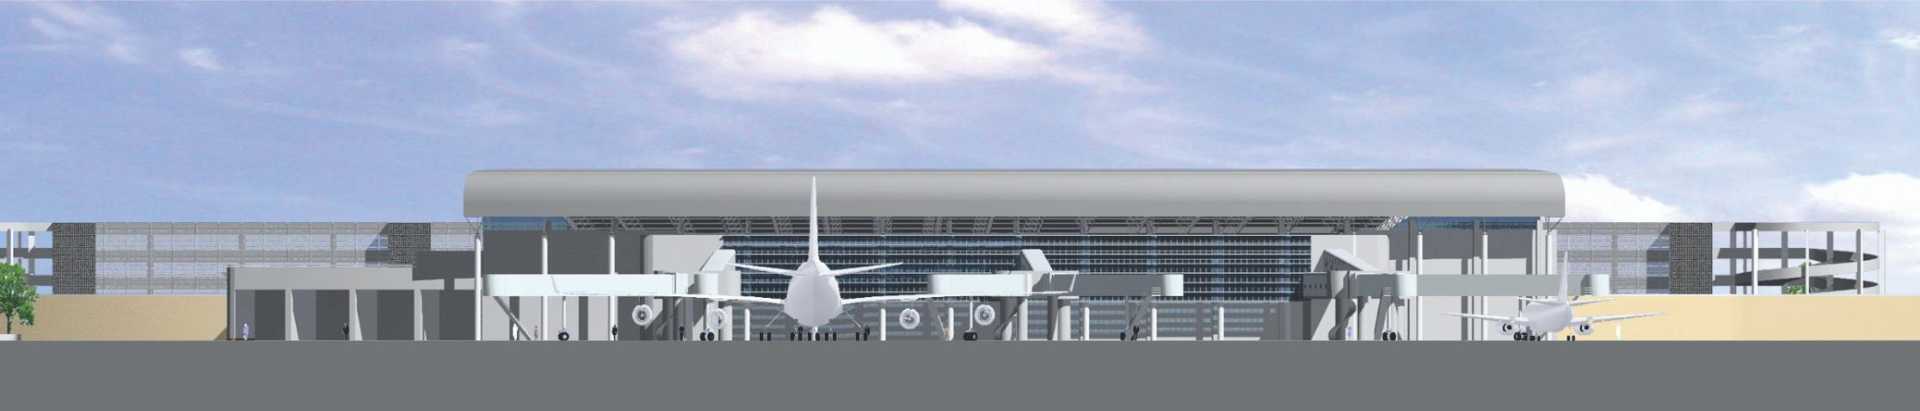 OAC Architects | Project | Murtala Muhammed Airport Terminal 2 (MMA2), Ikeja, Lagos 10